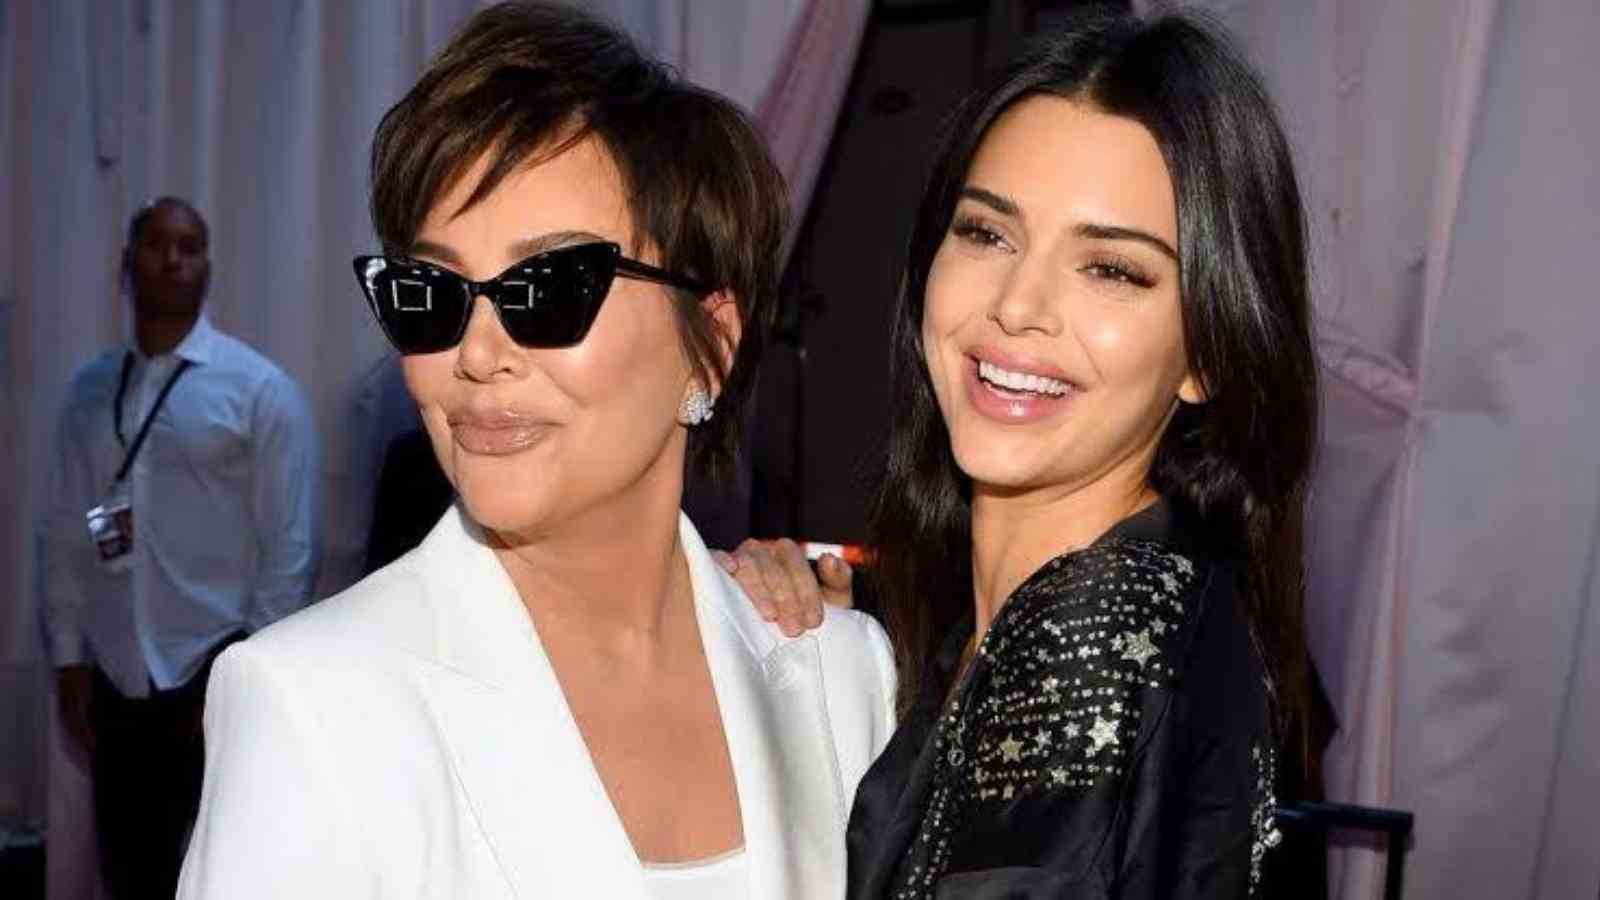 Kris Jenner Pressurized Kendall to Have Children